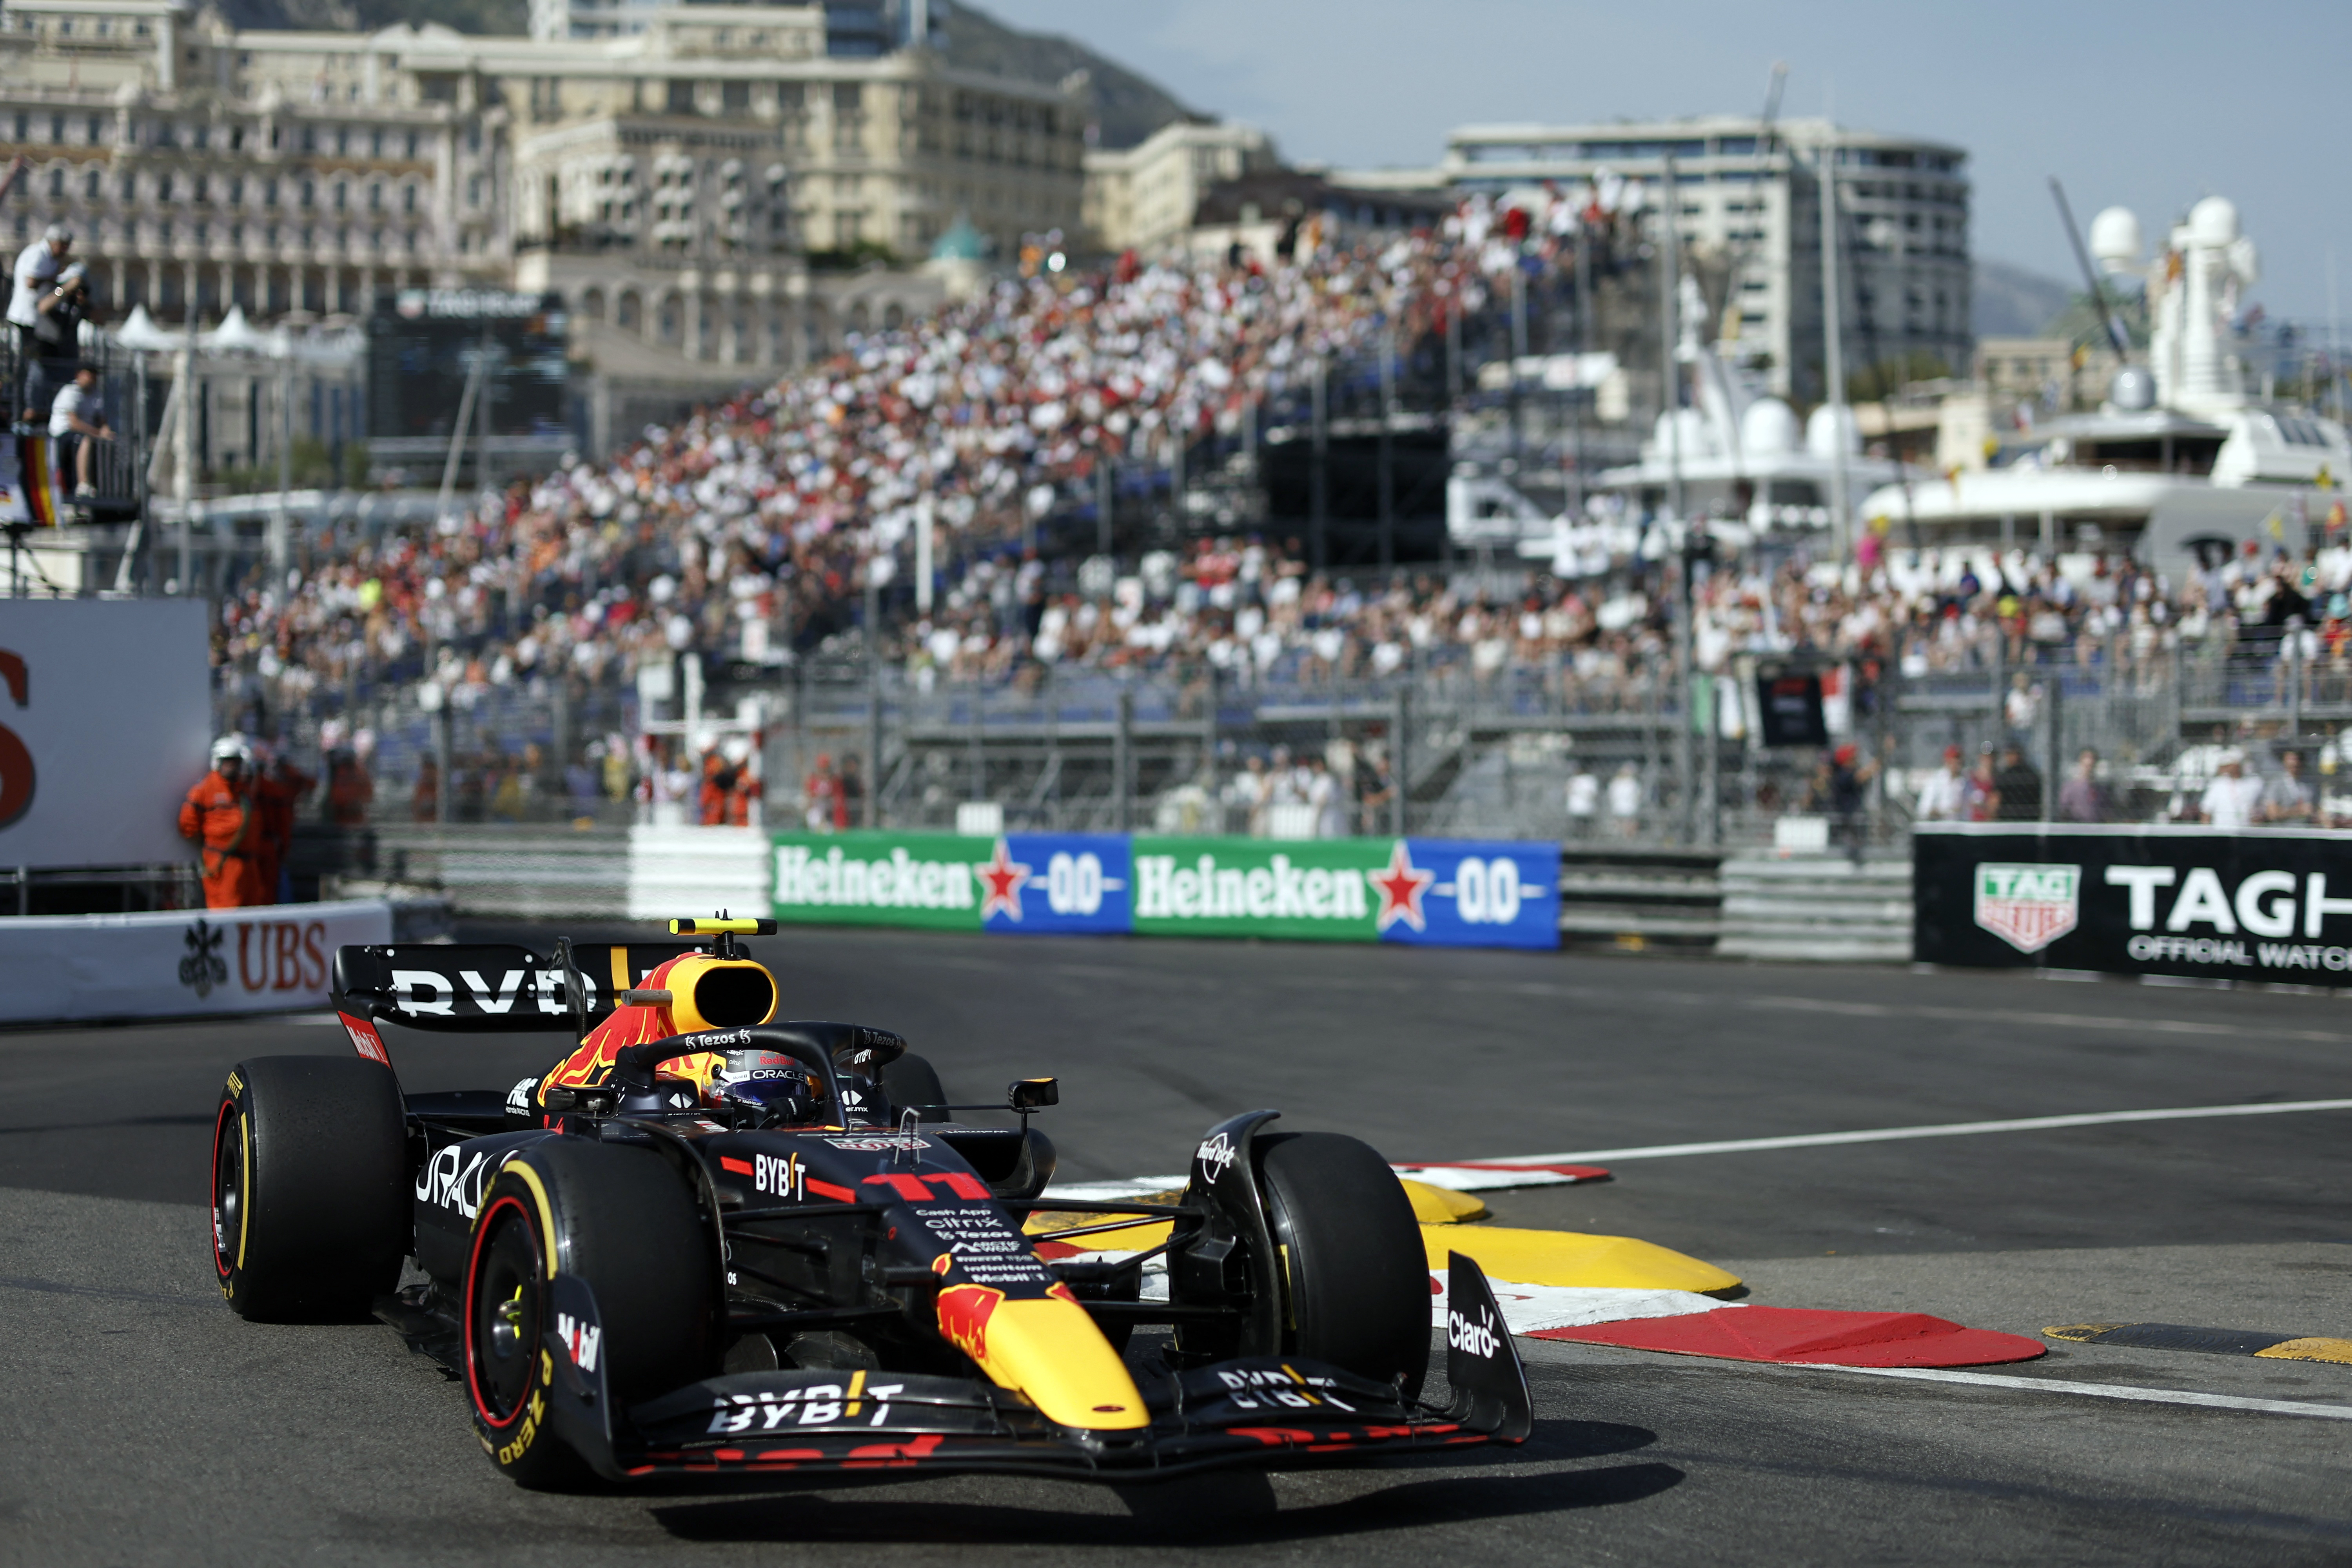 Destacada actuación de Checo Pérez durante primer día de actividades en el Gran Premio de Mónaco